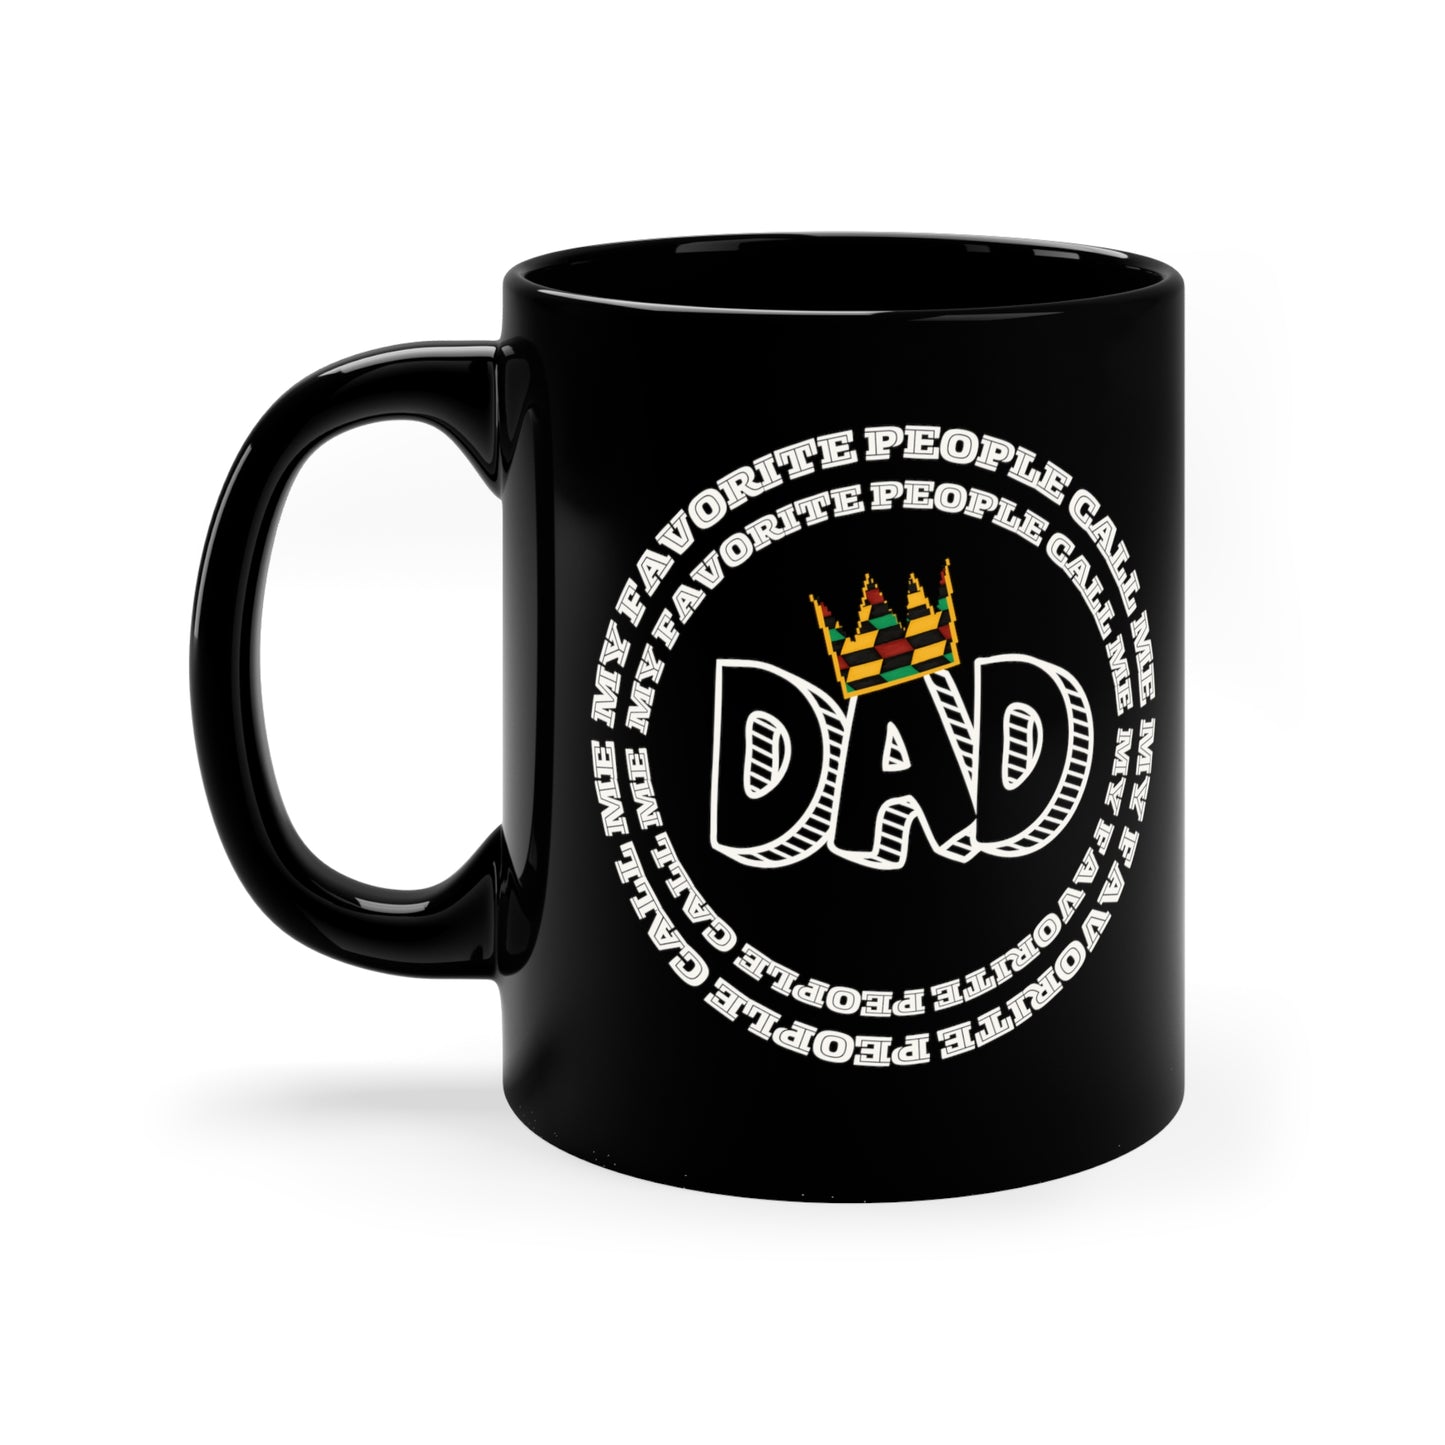 My Favorite People Call Me DAD Black Coffee Mug, 11oz